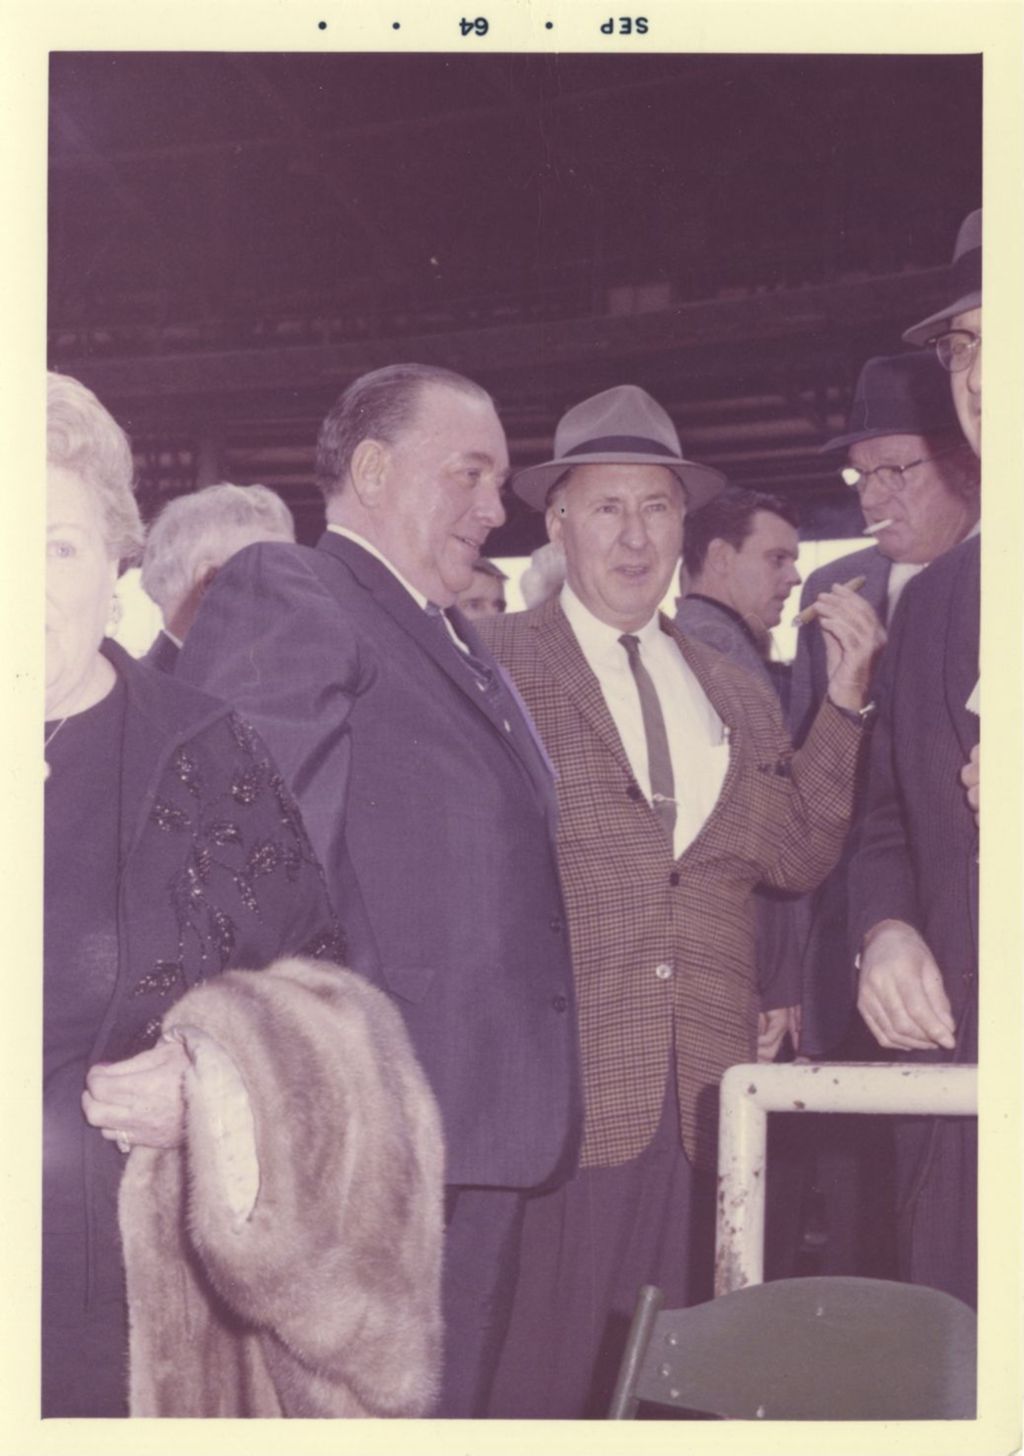 Richard J. Daley and others at a baseball game